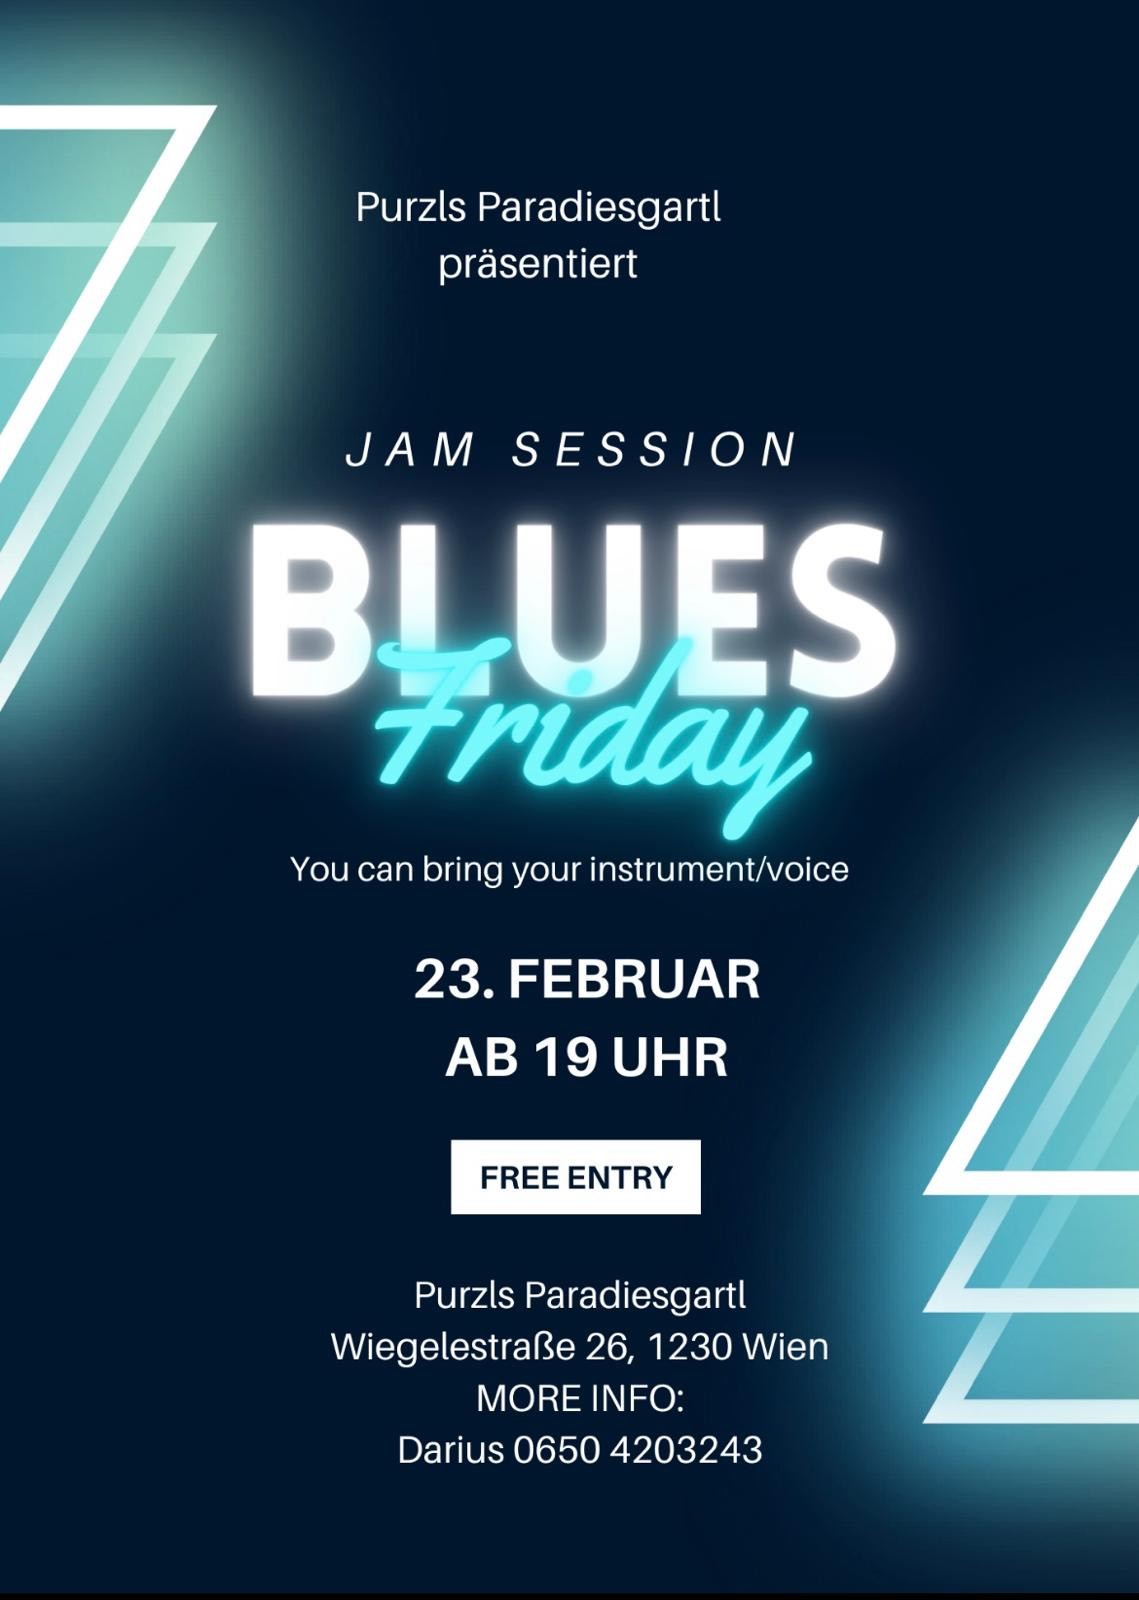 Jam Session Blues Friday @ Purzls Paradiesgartl